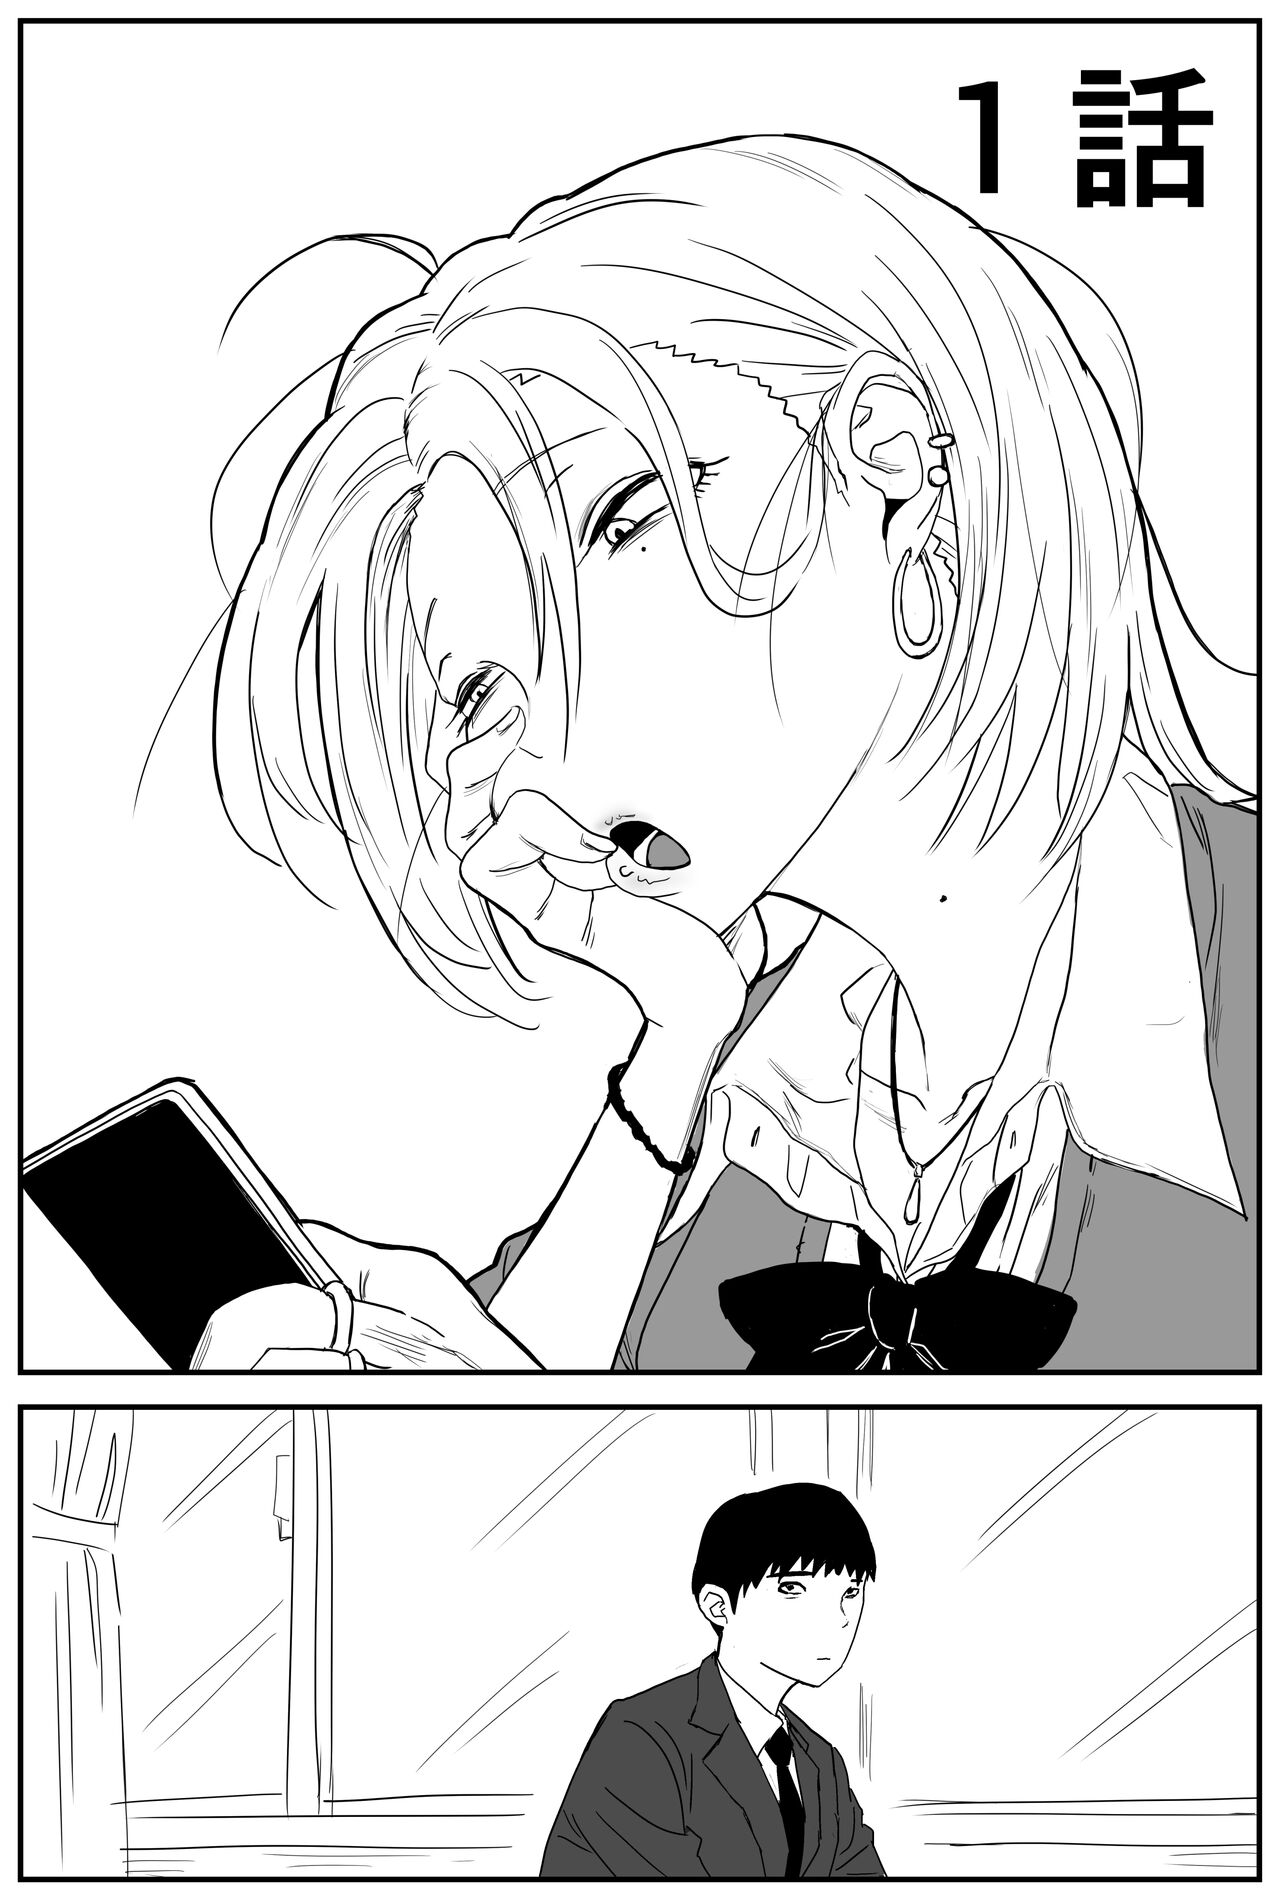 Gal JK Ero Manga Ch.1-27 - Page 3 - HentaiRox